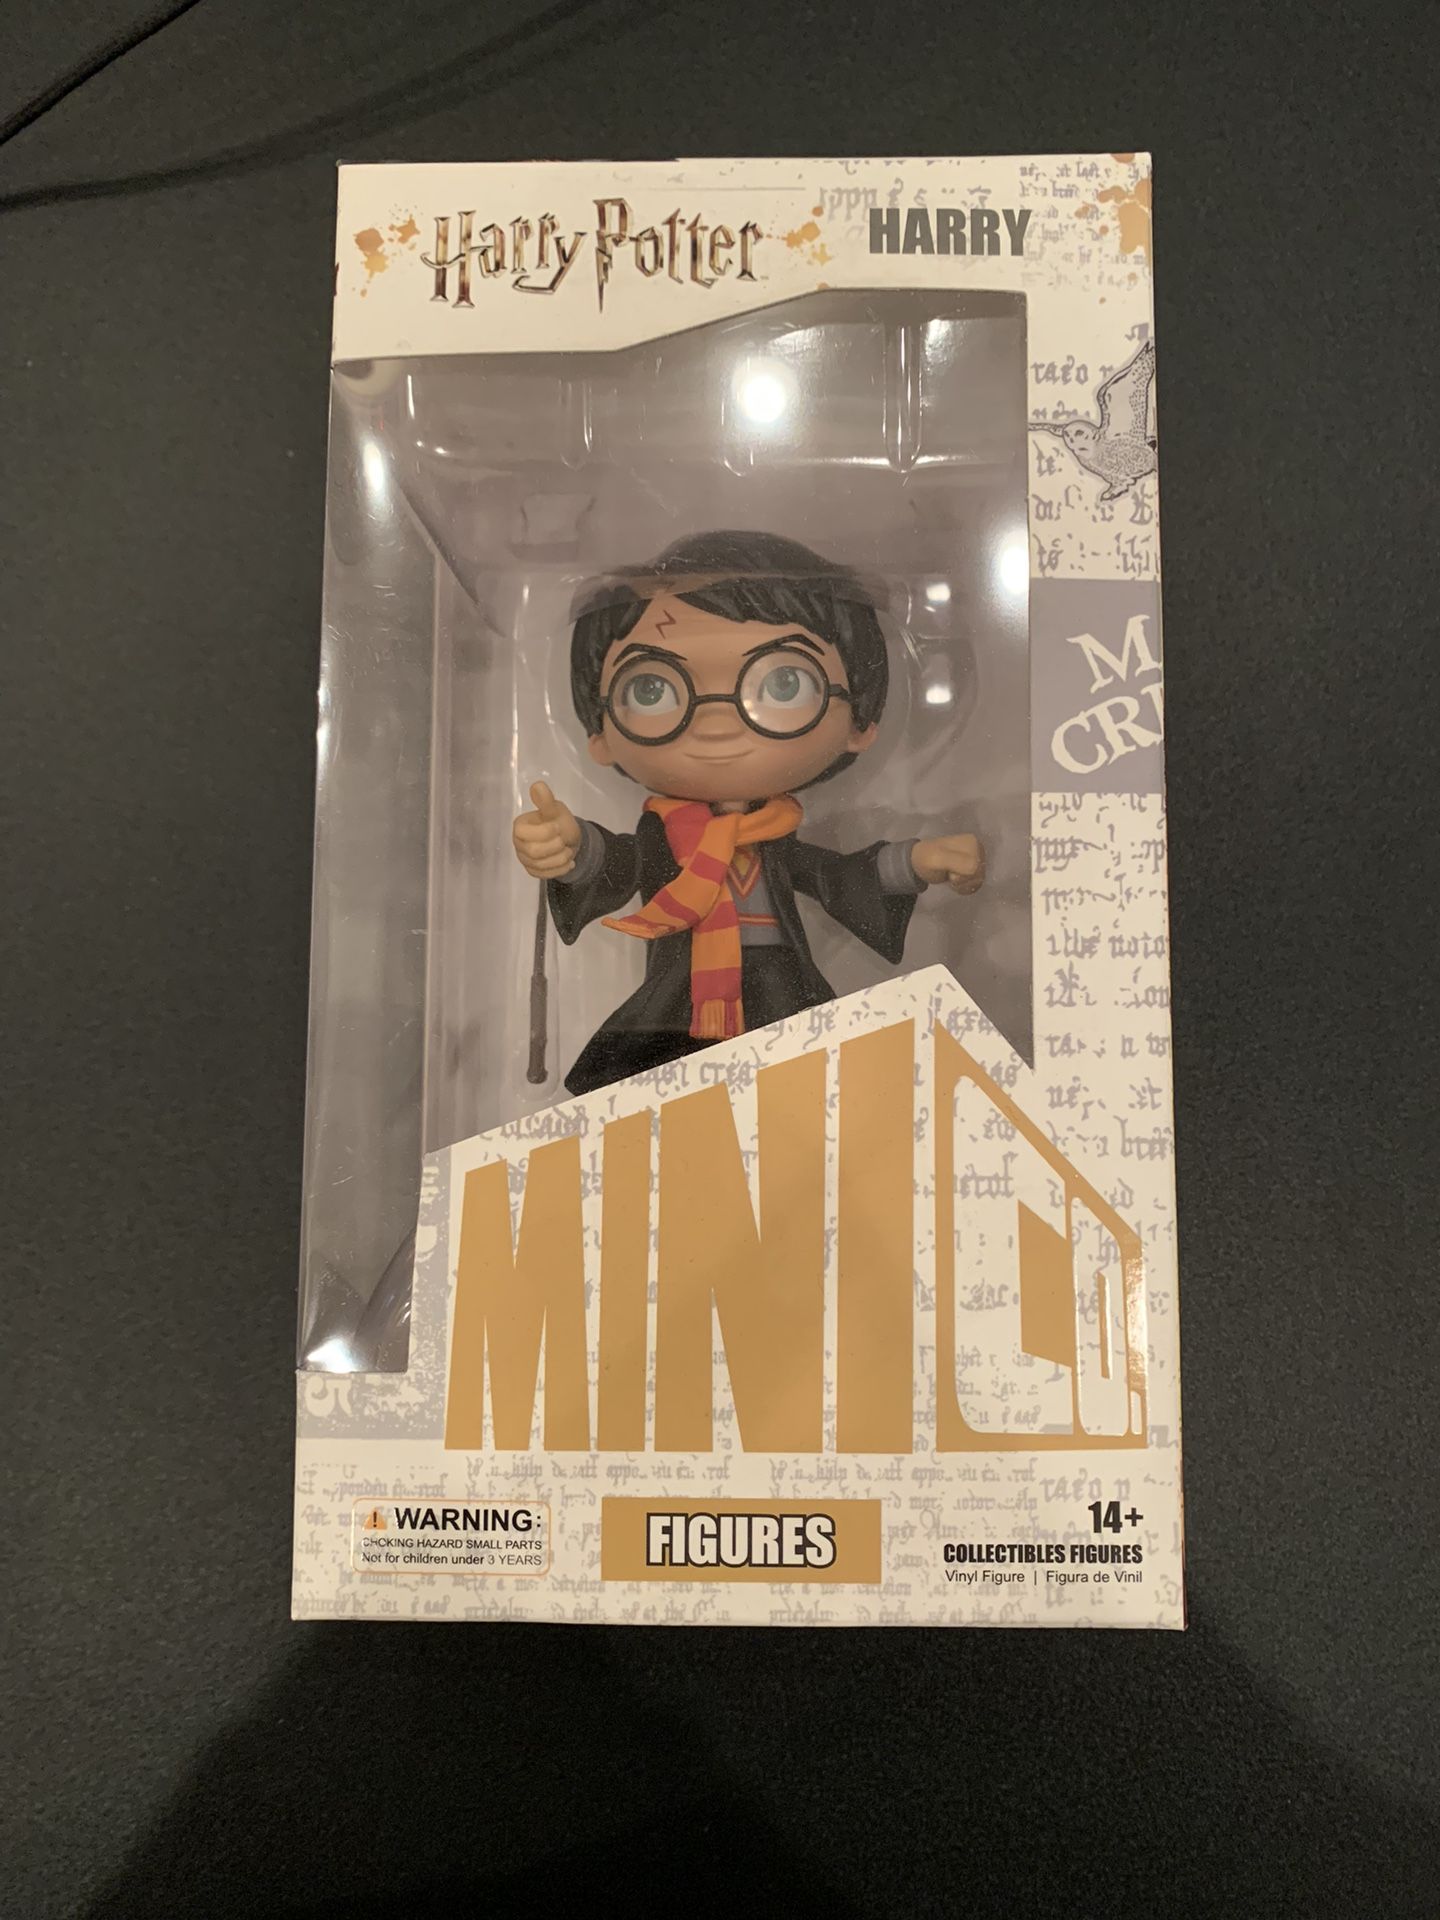 Harry Potter: Harry Potter Mini Co Collectible Vinyl Figure